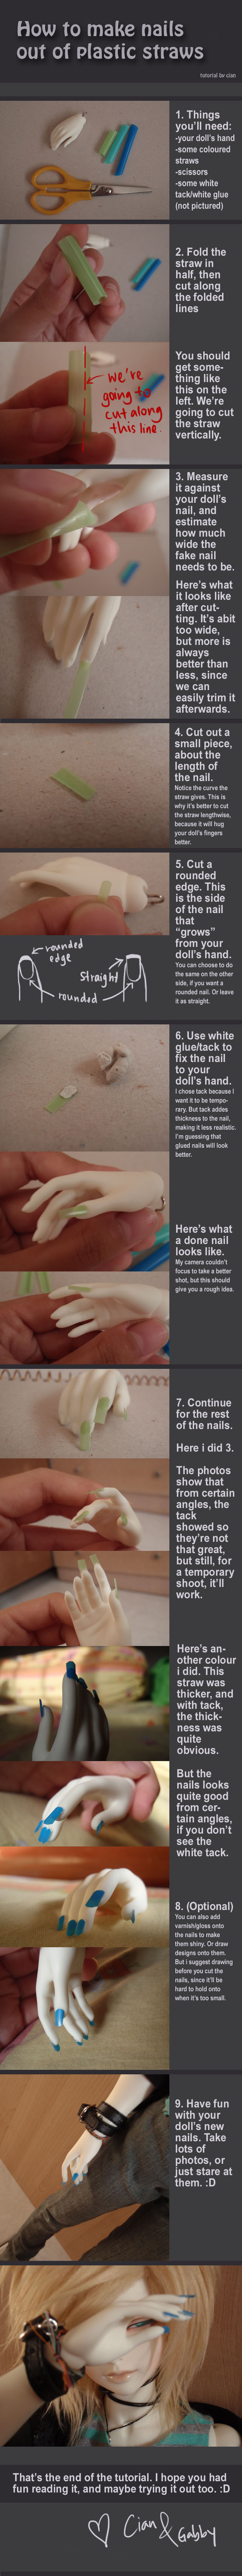 Plastic nails for bjd tutorial